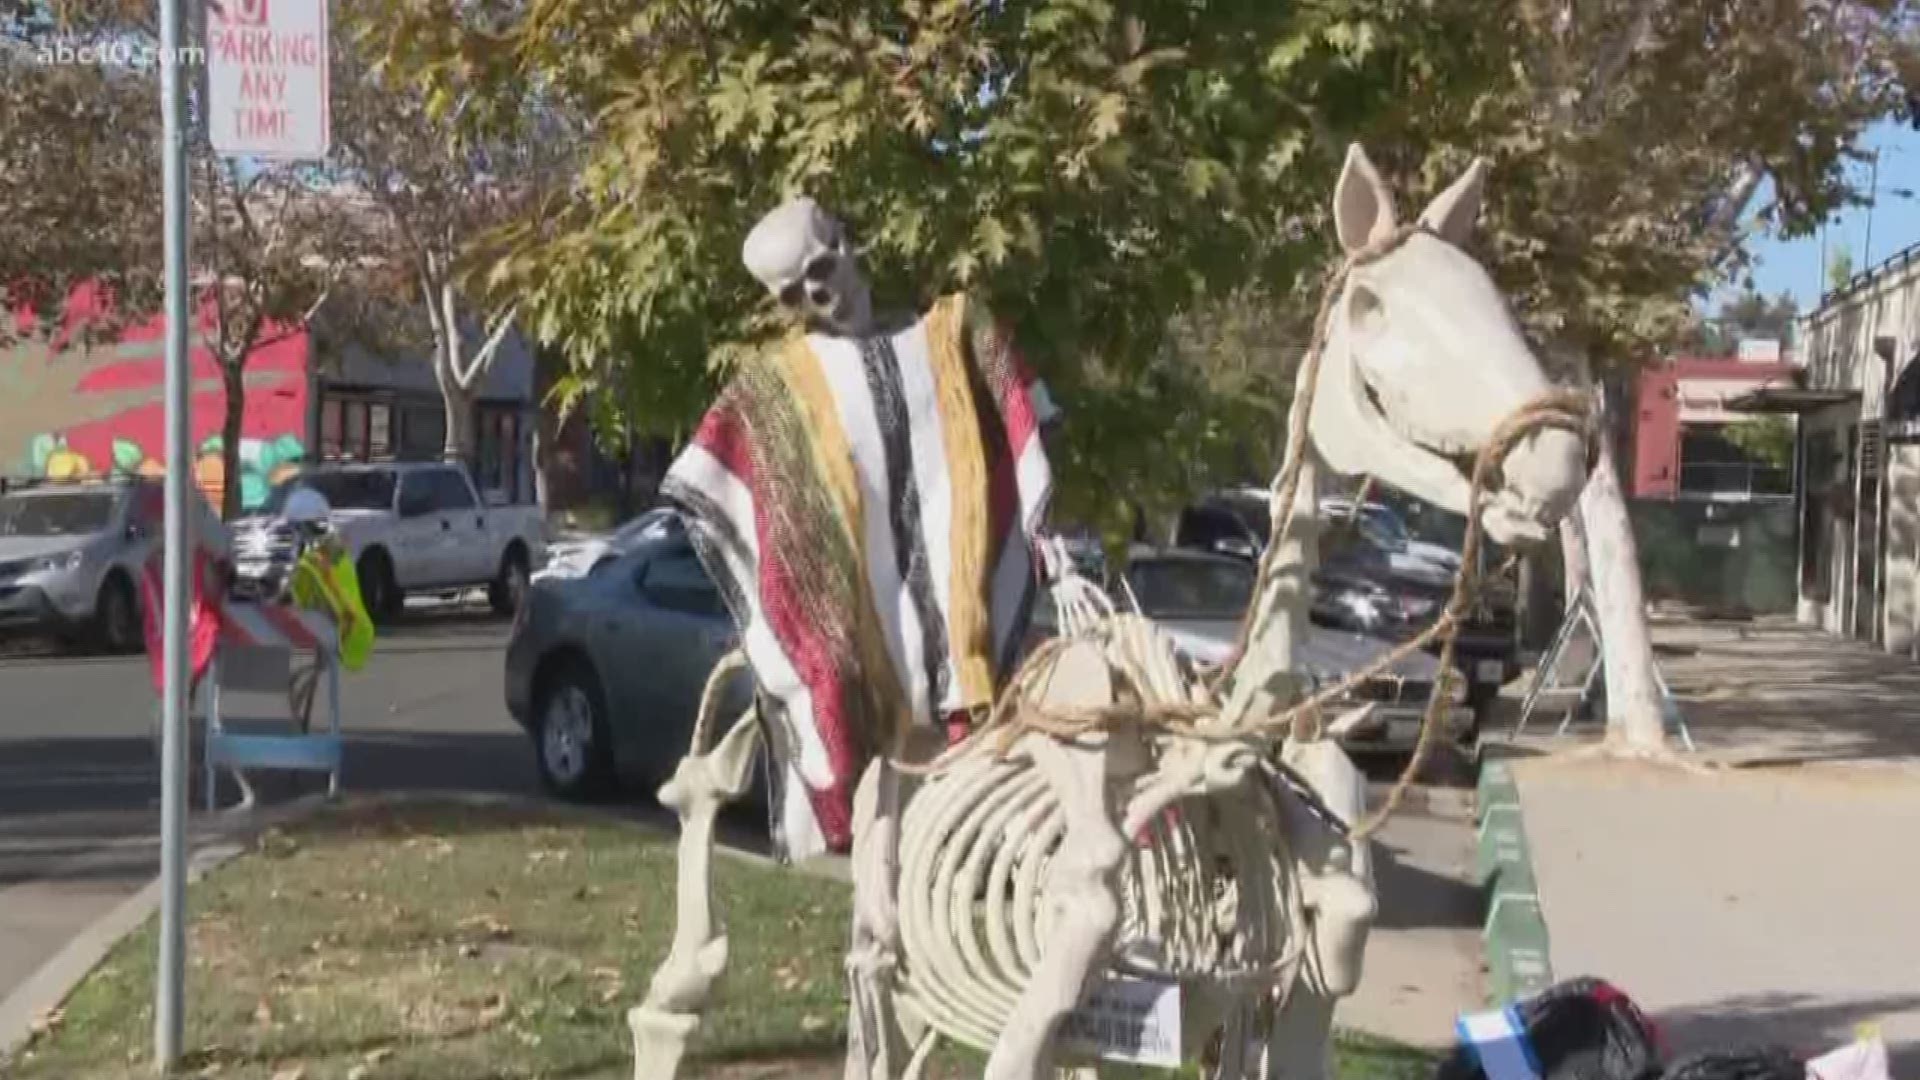 Sacramento's Oak Park neighborhood is getting ready to host a big Dia de los Muertos celebration.